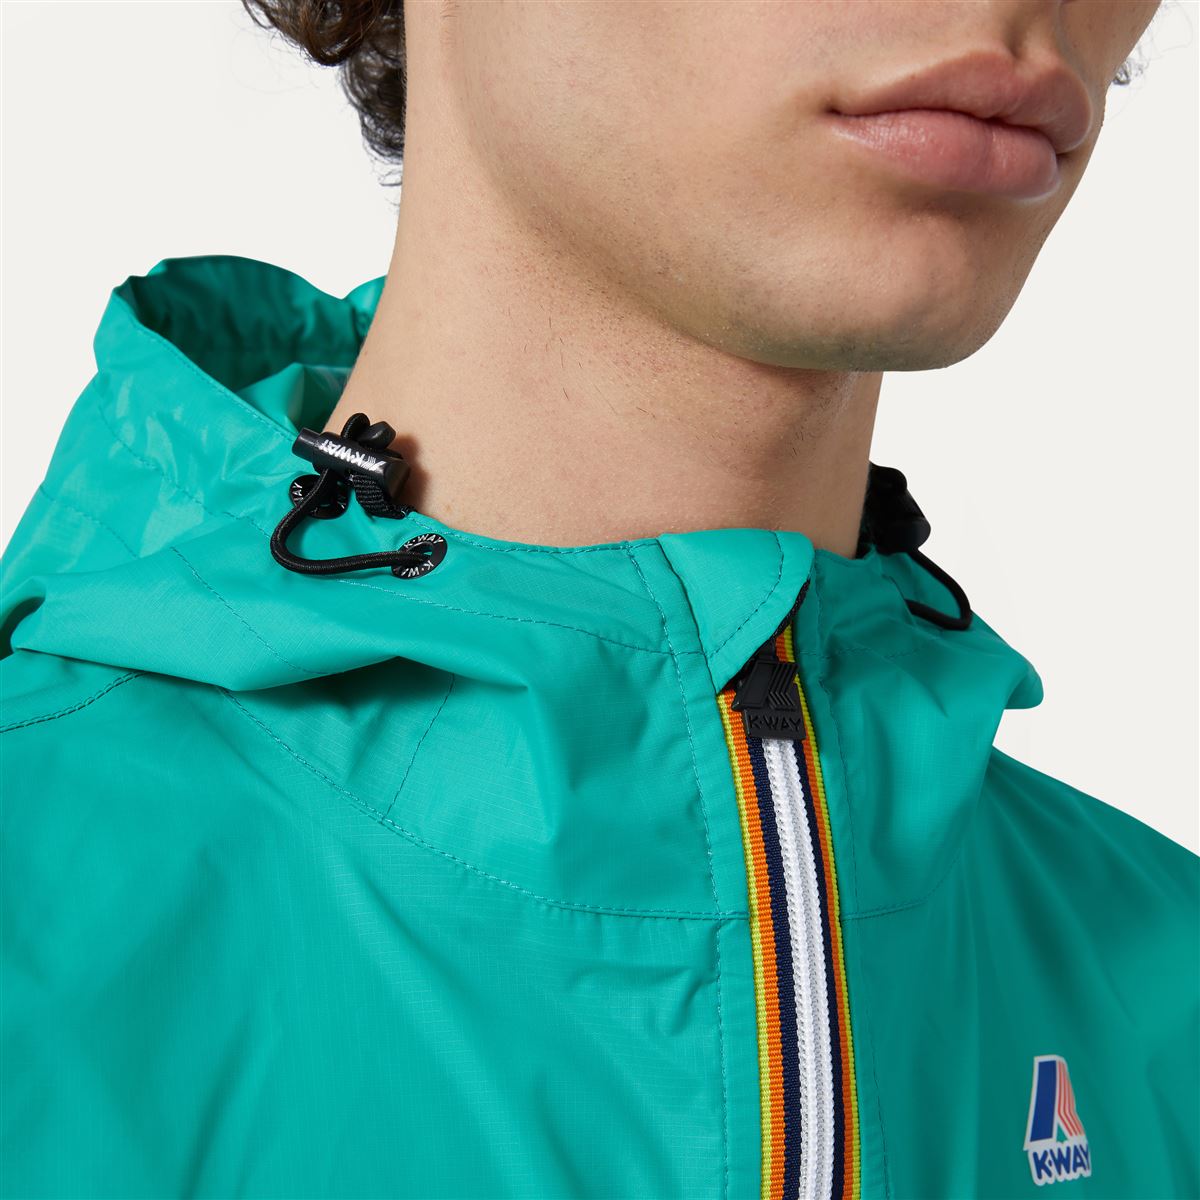 Claude - Unisex Packable Full Zip Waterproof  Rain Jacket in Green Marine